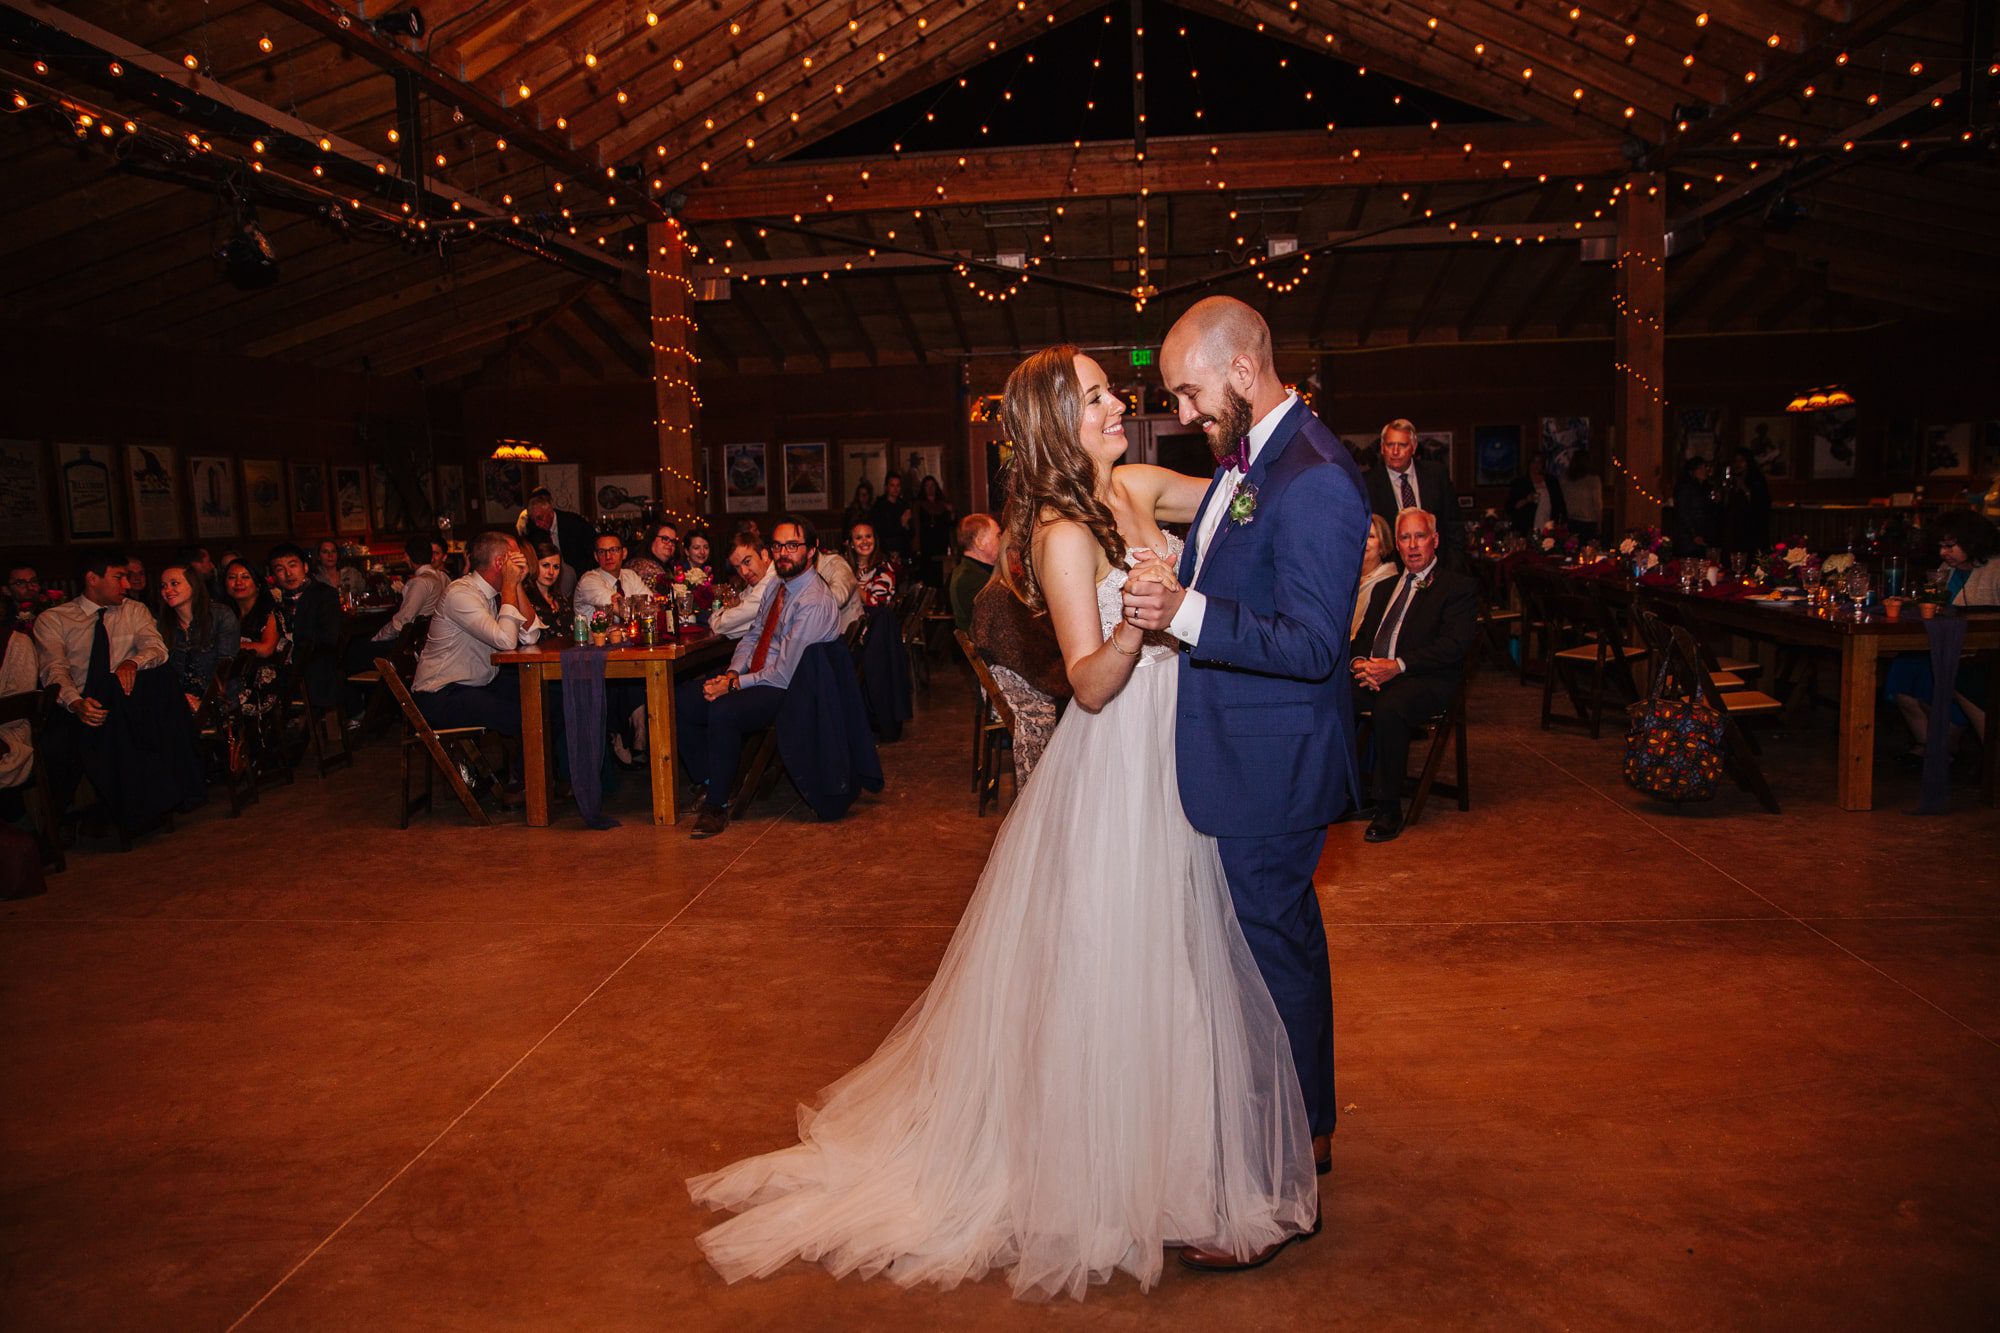 indoor wedding reception, planet bluegrass wedding, planet bluegrass reception, barn wedding, colorado wedding venue, bride and groom first dance, blue suit groom